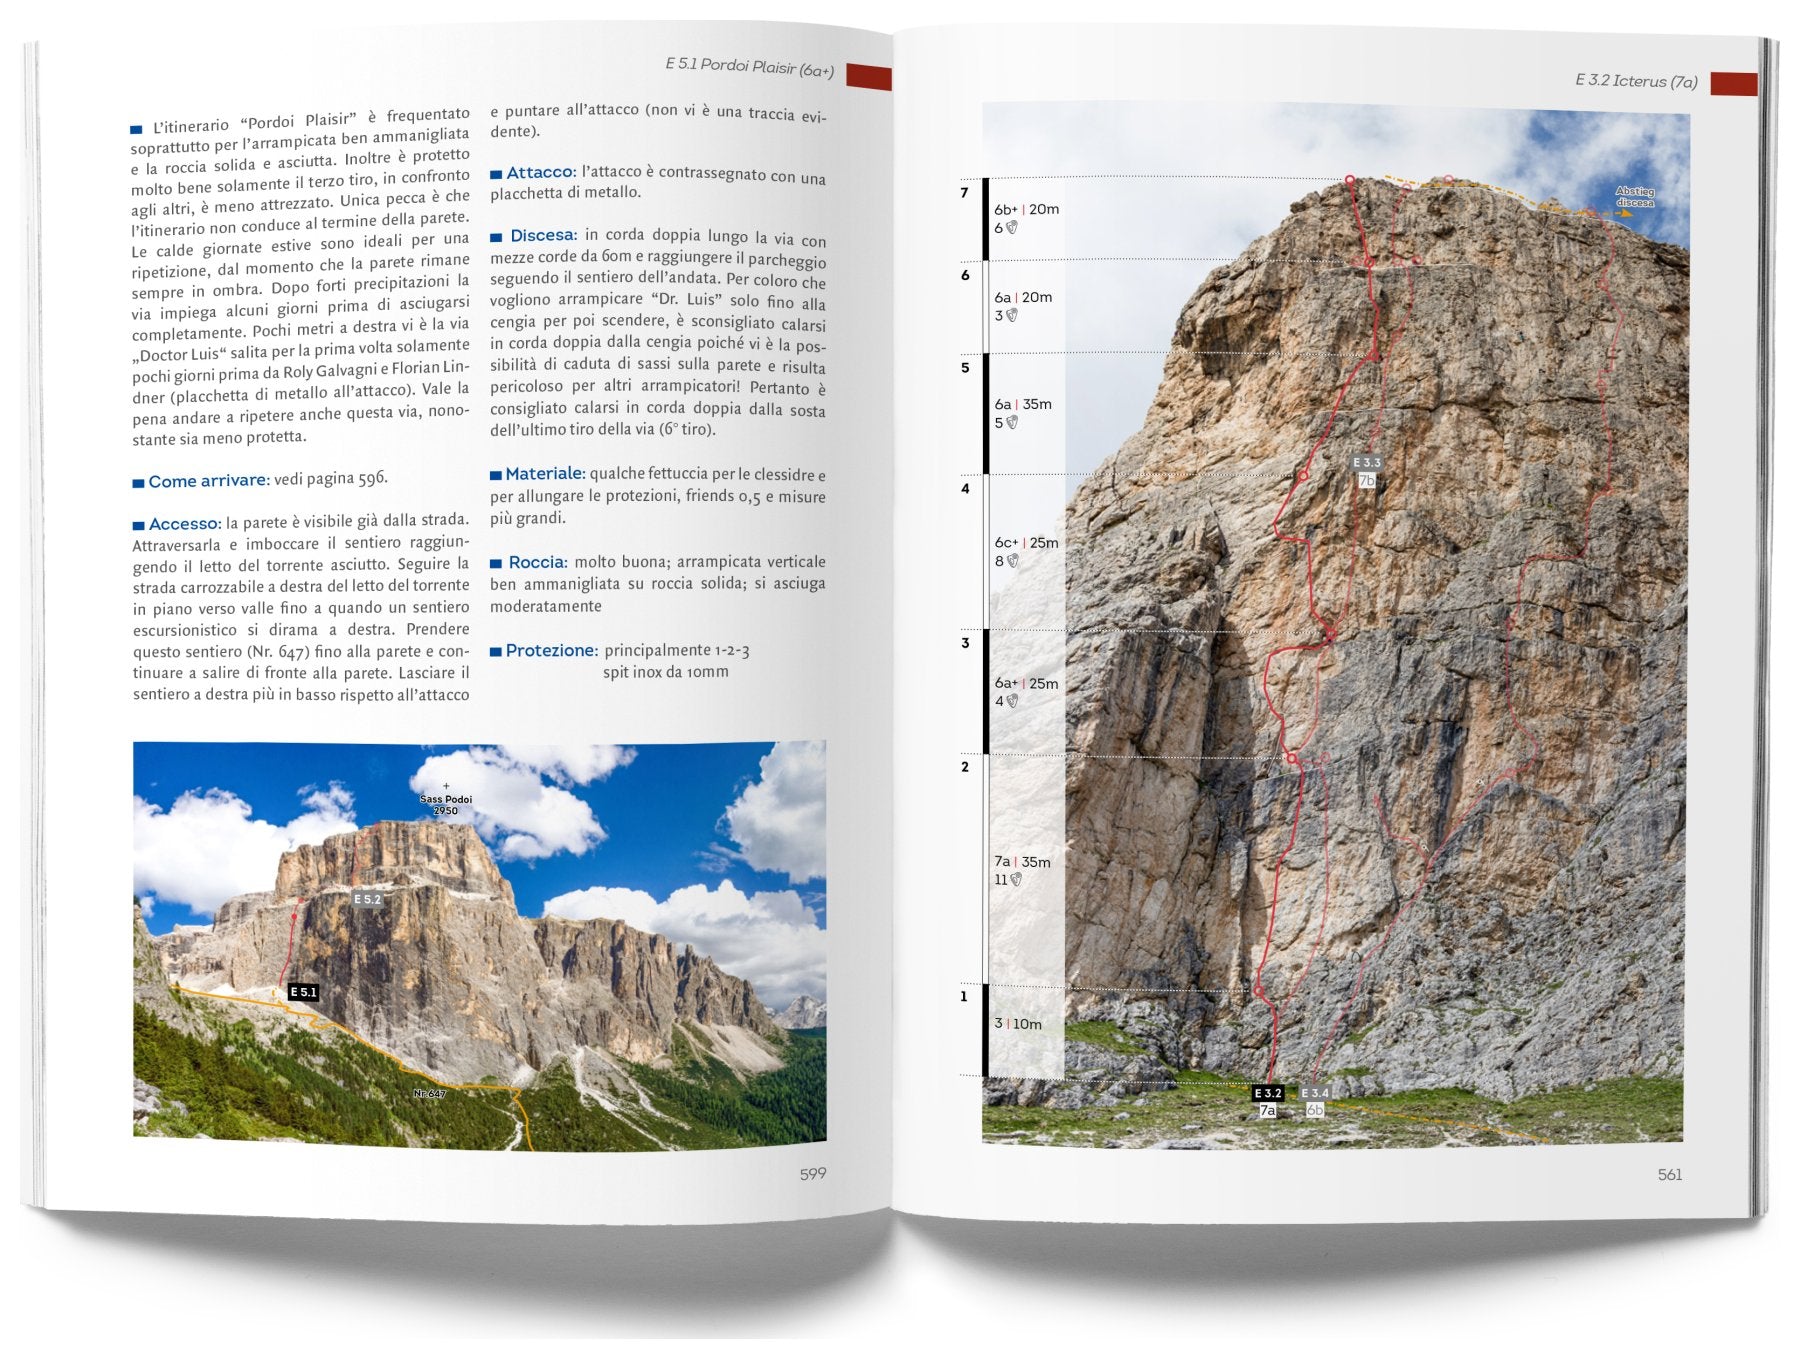 Dolomites multi-pitch climbing (2021), guidebook